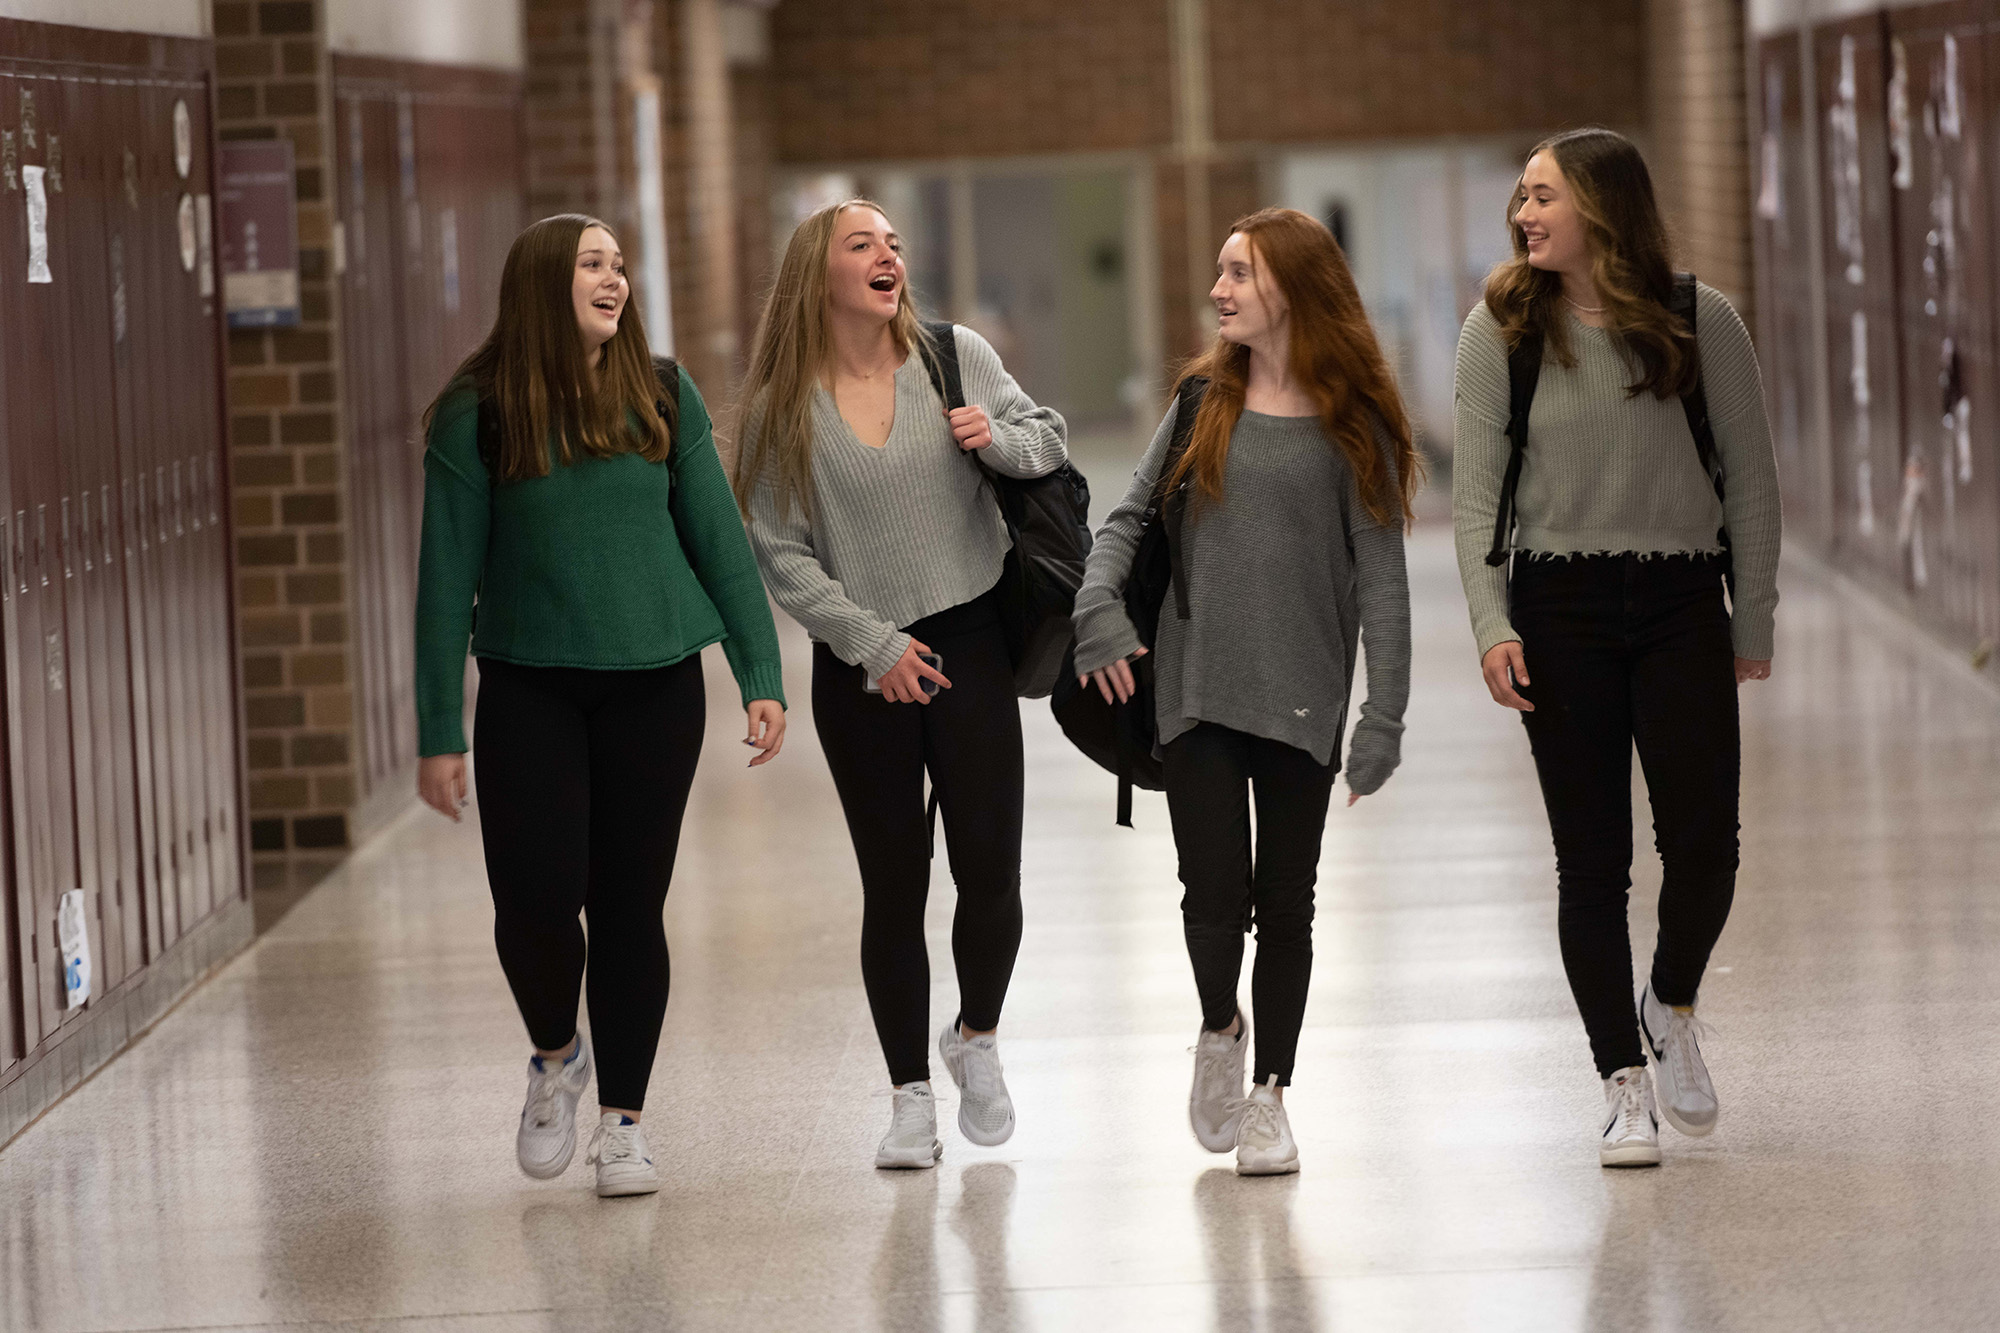 four girls talk and laugh while walking through a school hallway